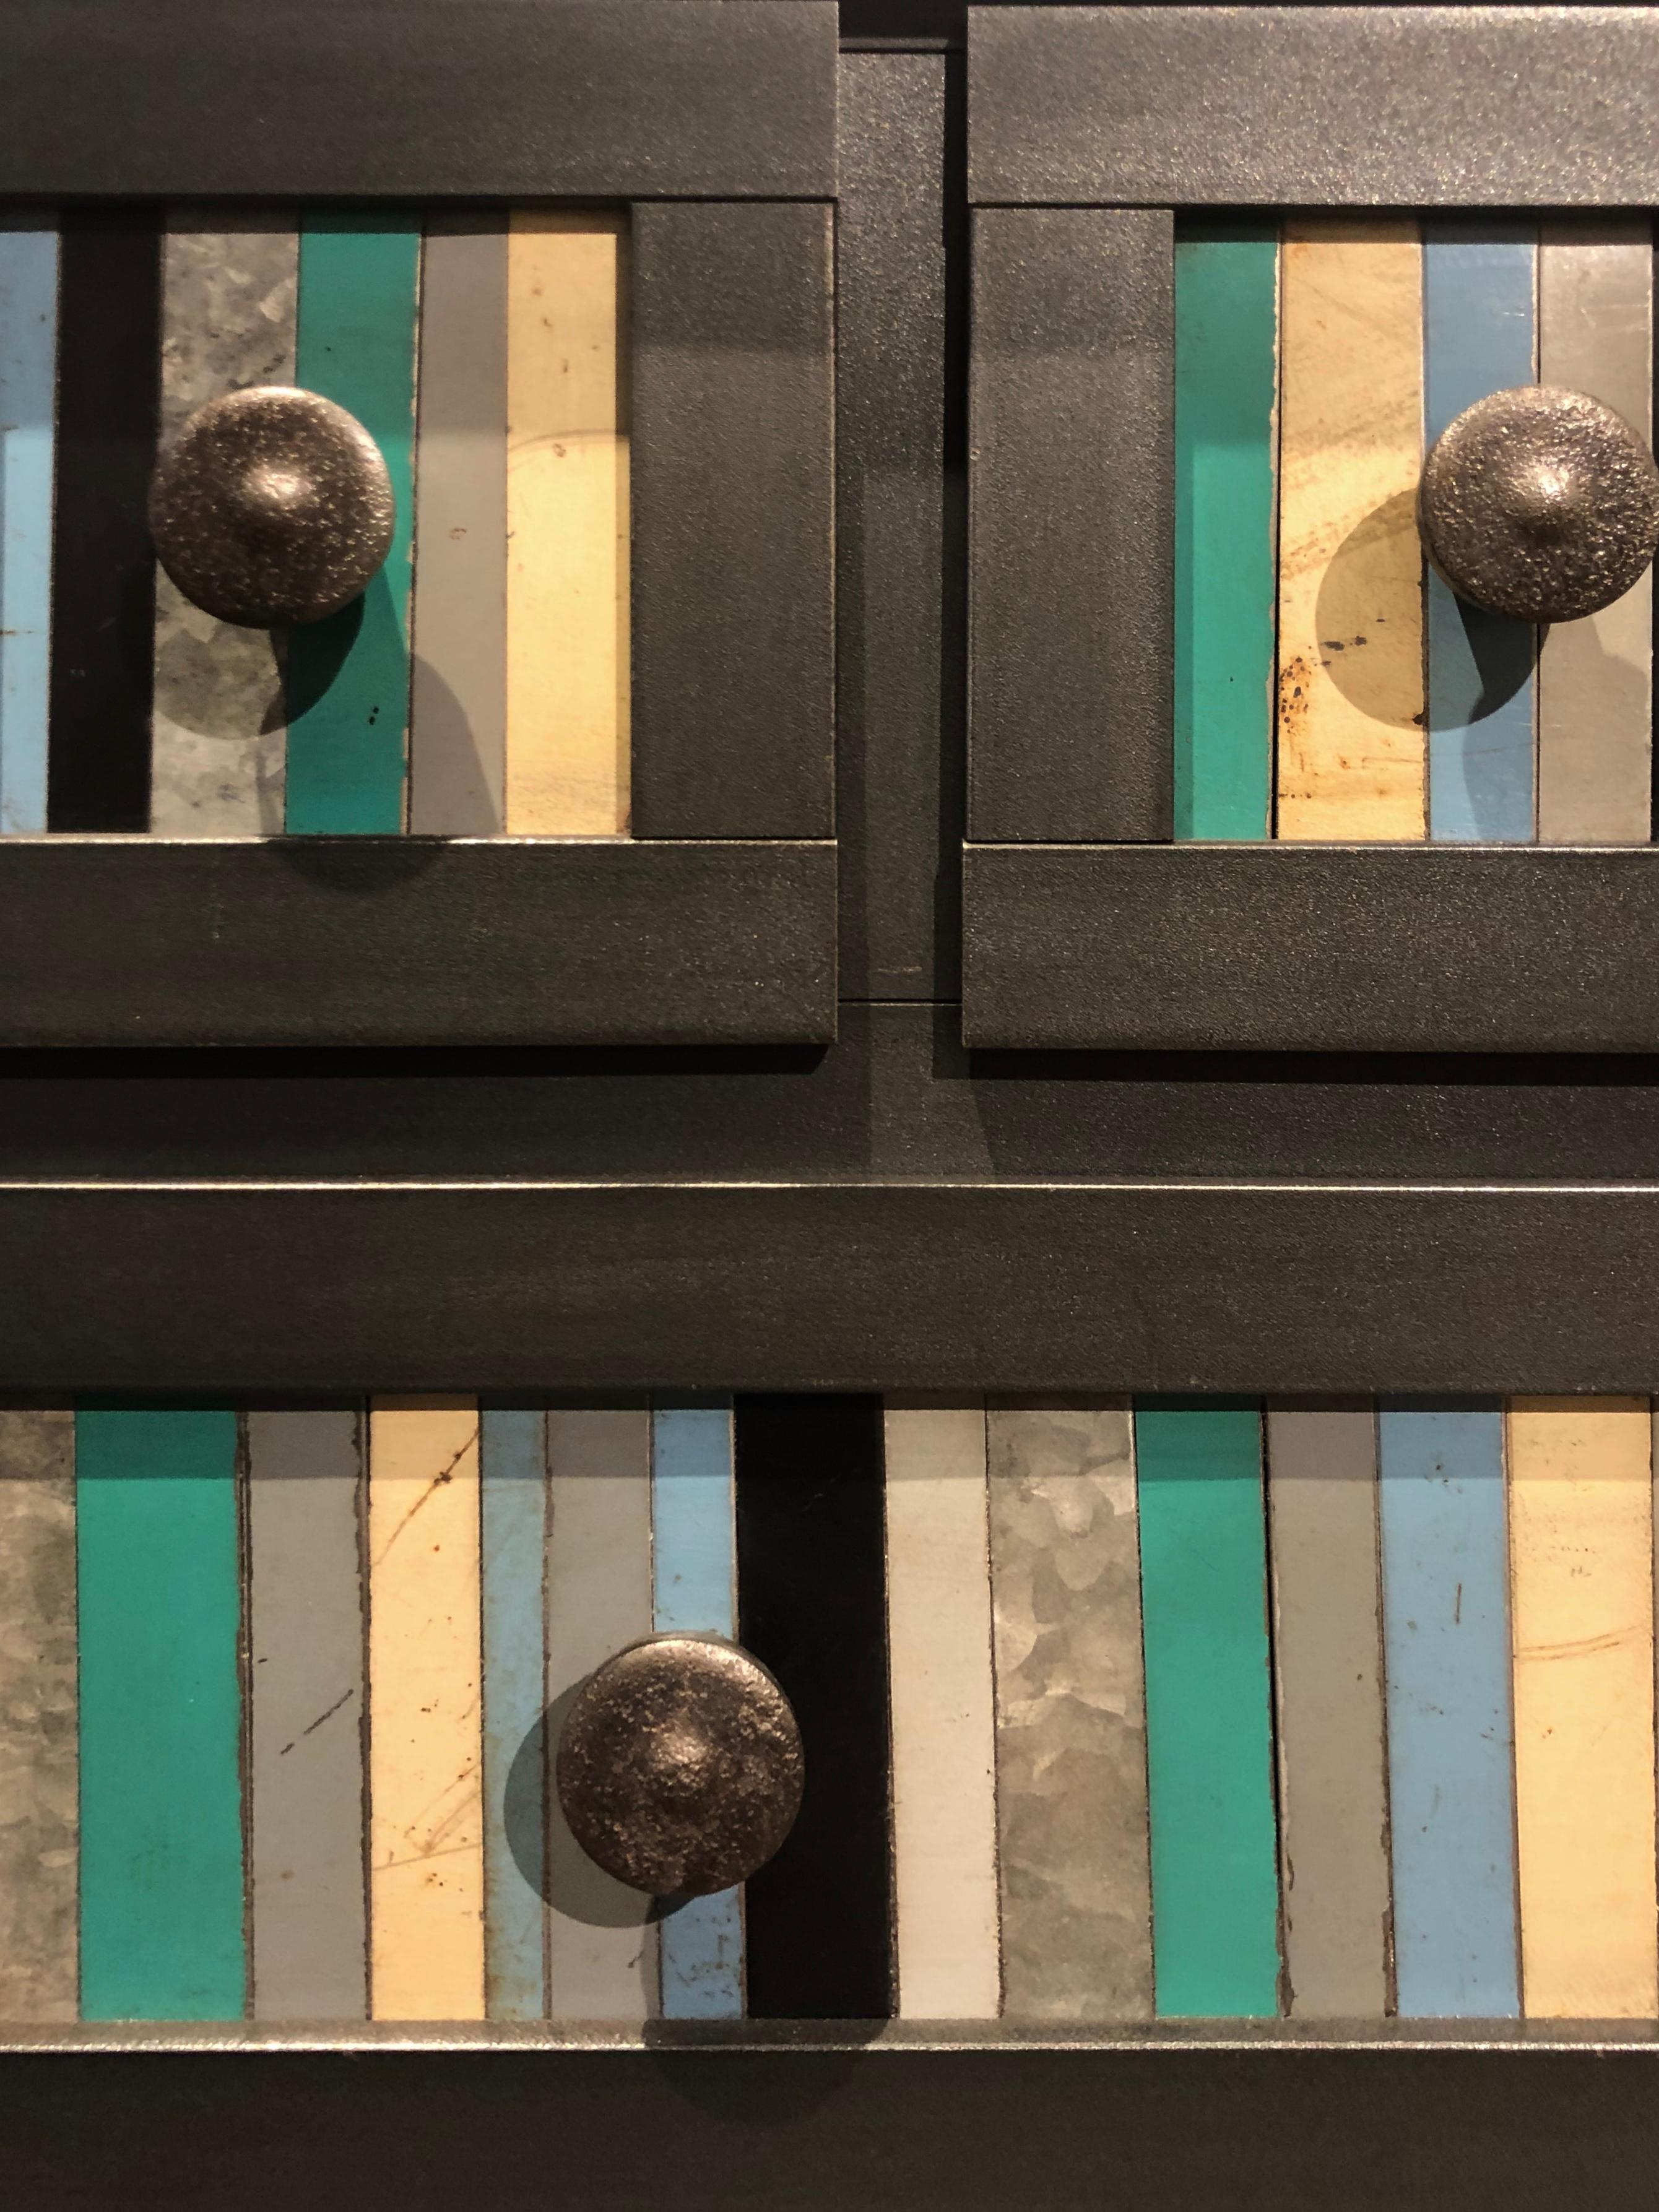 Welded Jim Rose Five-Drawer Strip Quilt Table, Steel Furniture, Found Multicolor Panels